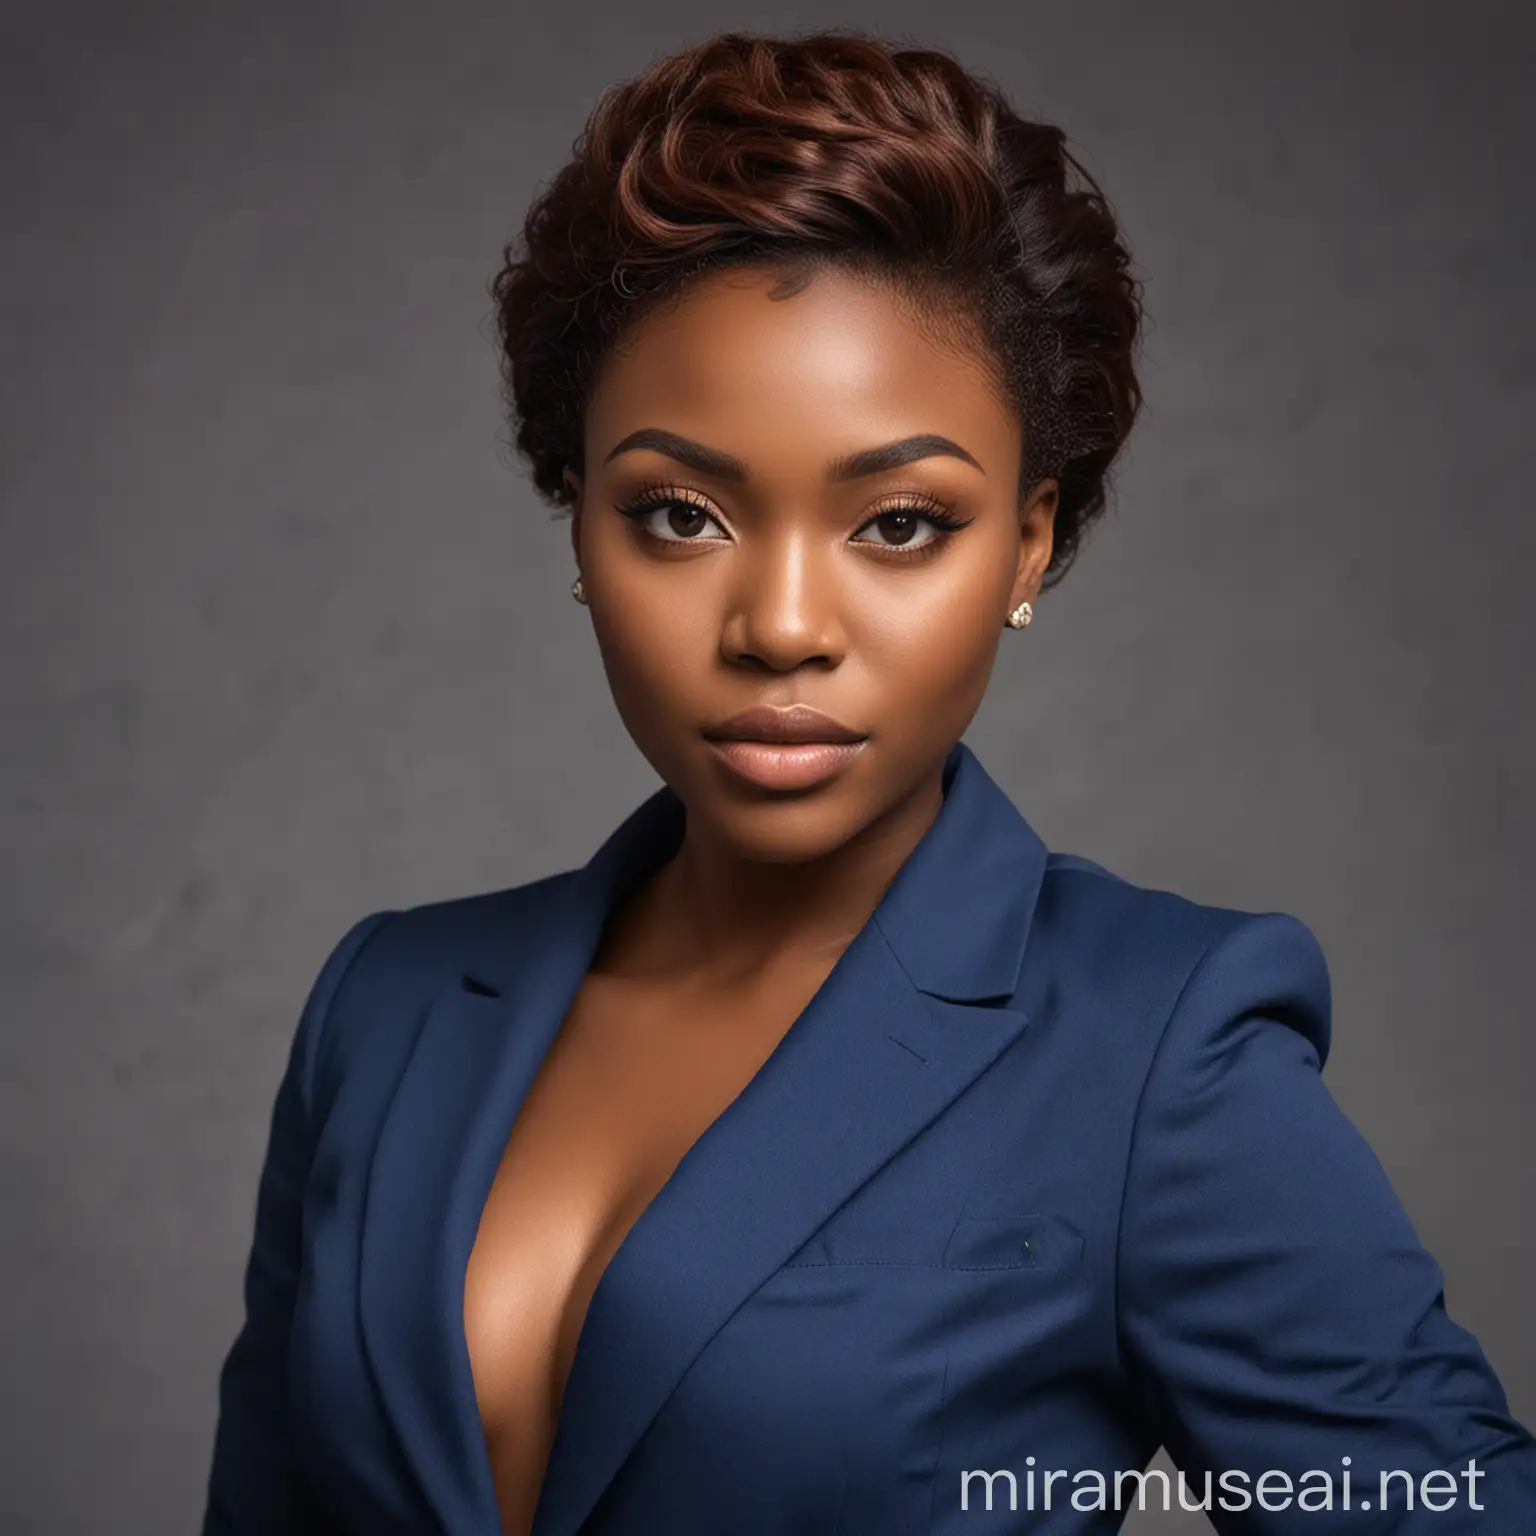 Elegant Nigerian Woman in Blue Suit Sophisticated Professional Portrait